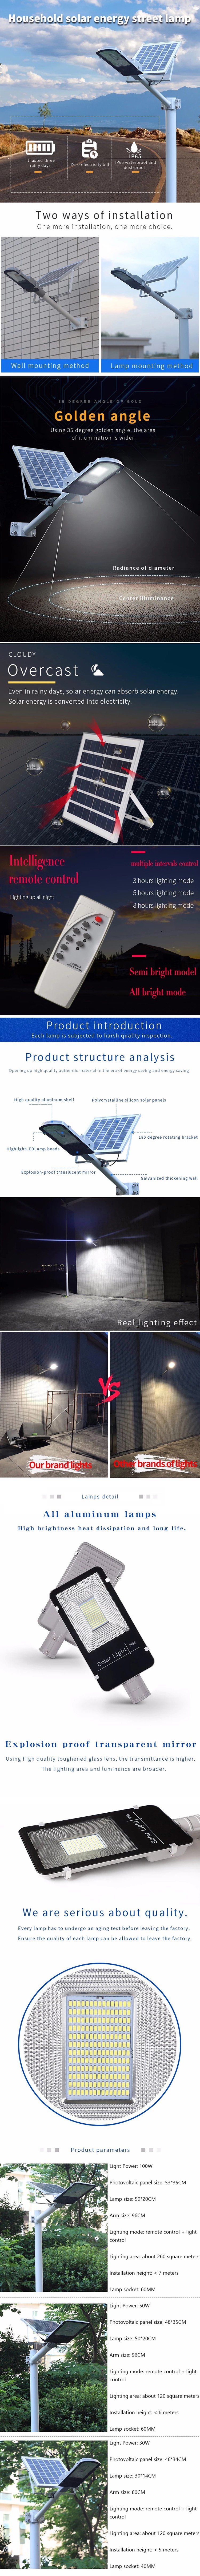 High Quality led solar street light 100W Solar Lamp With Panel And Lamp Pole LED Street Light